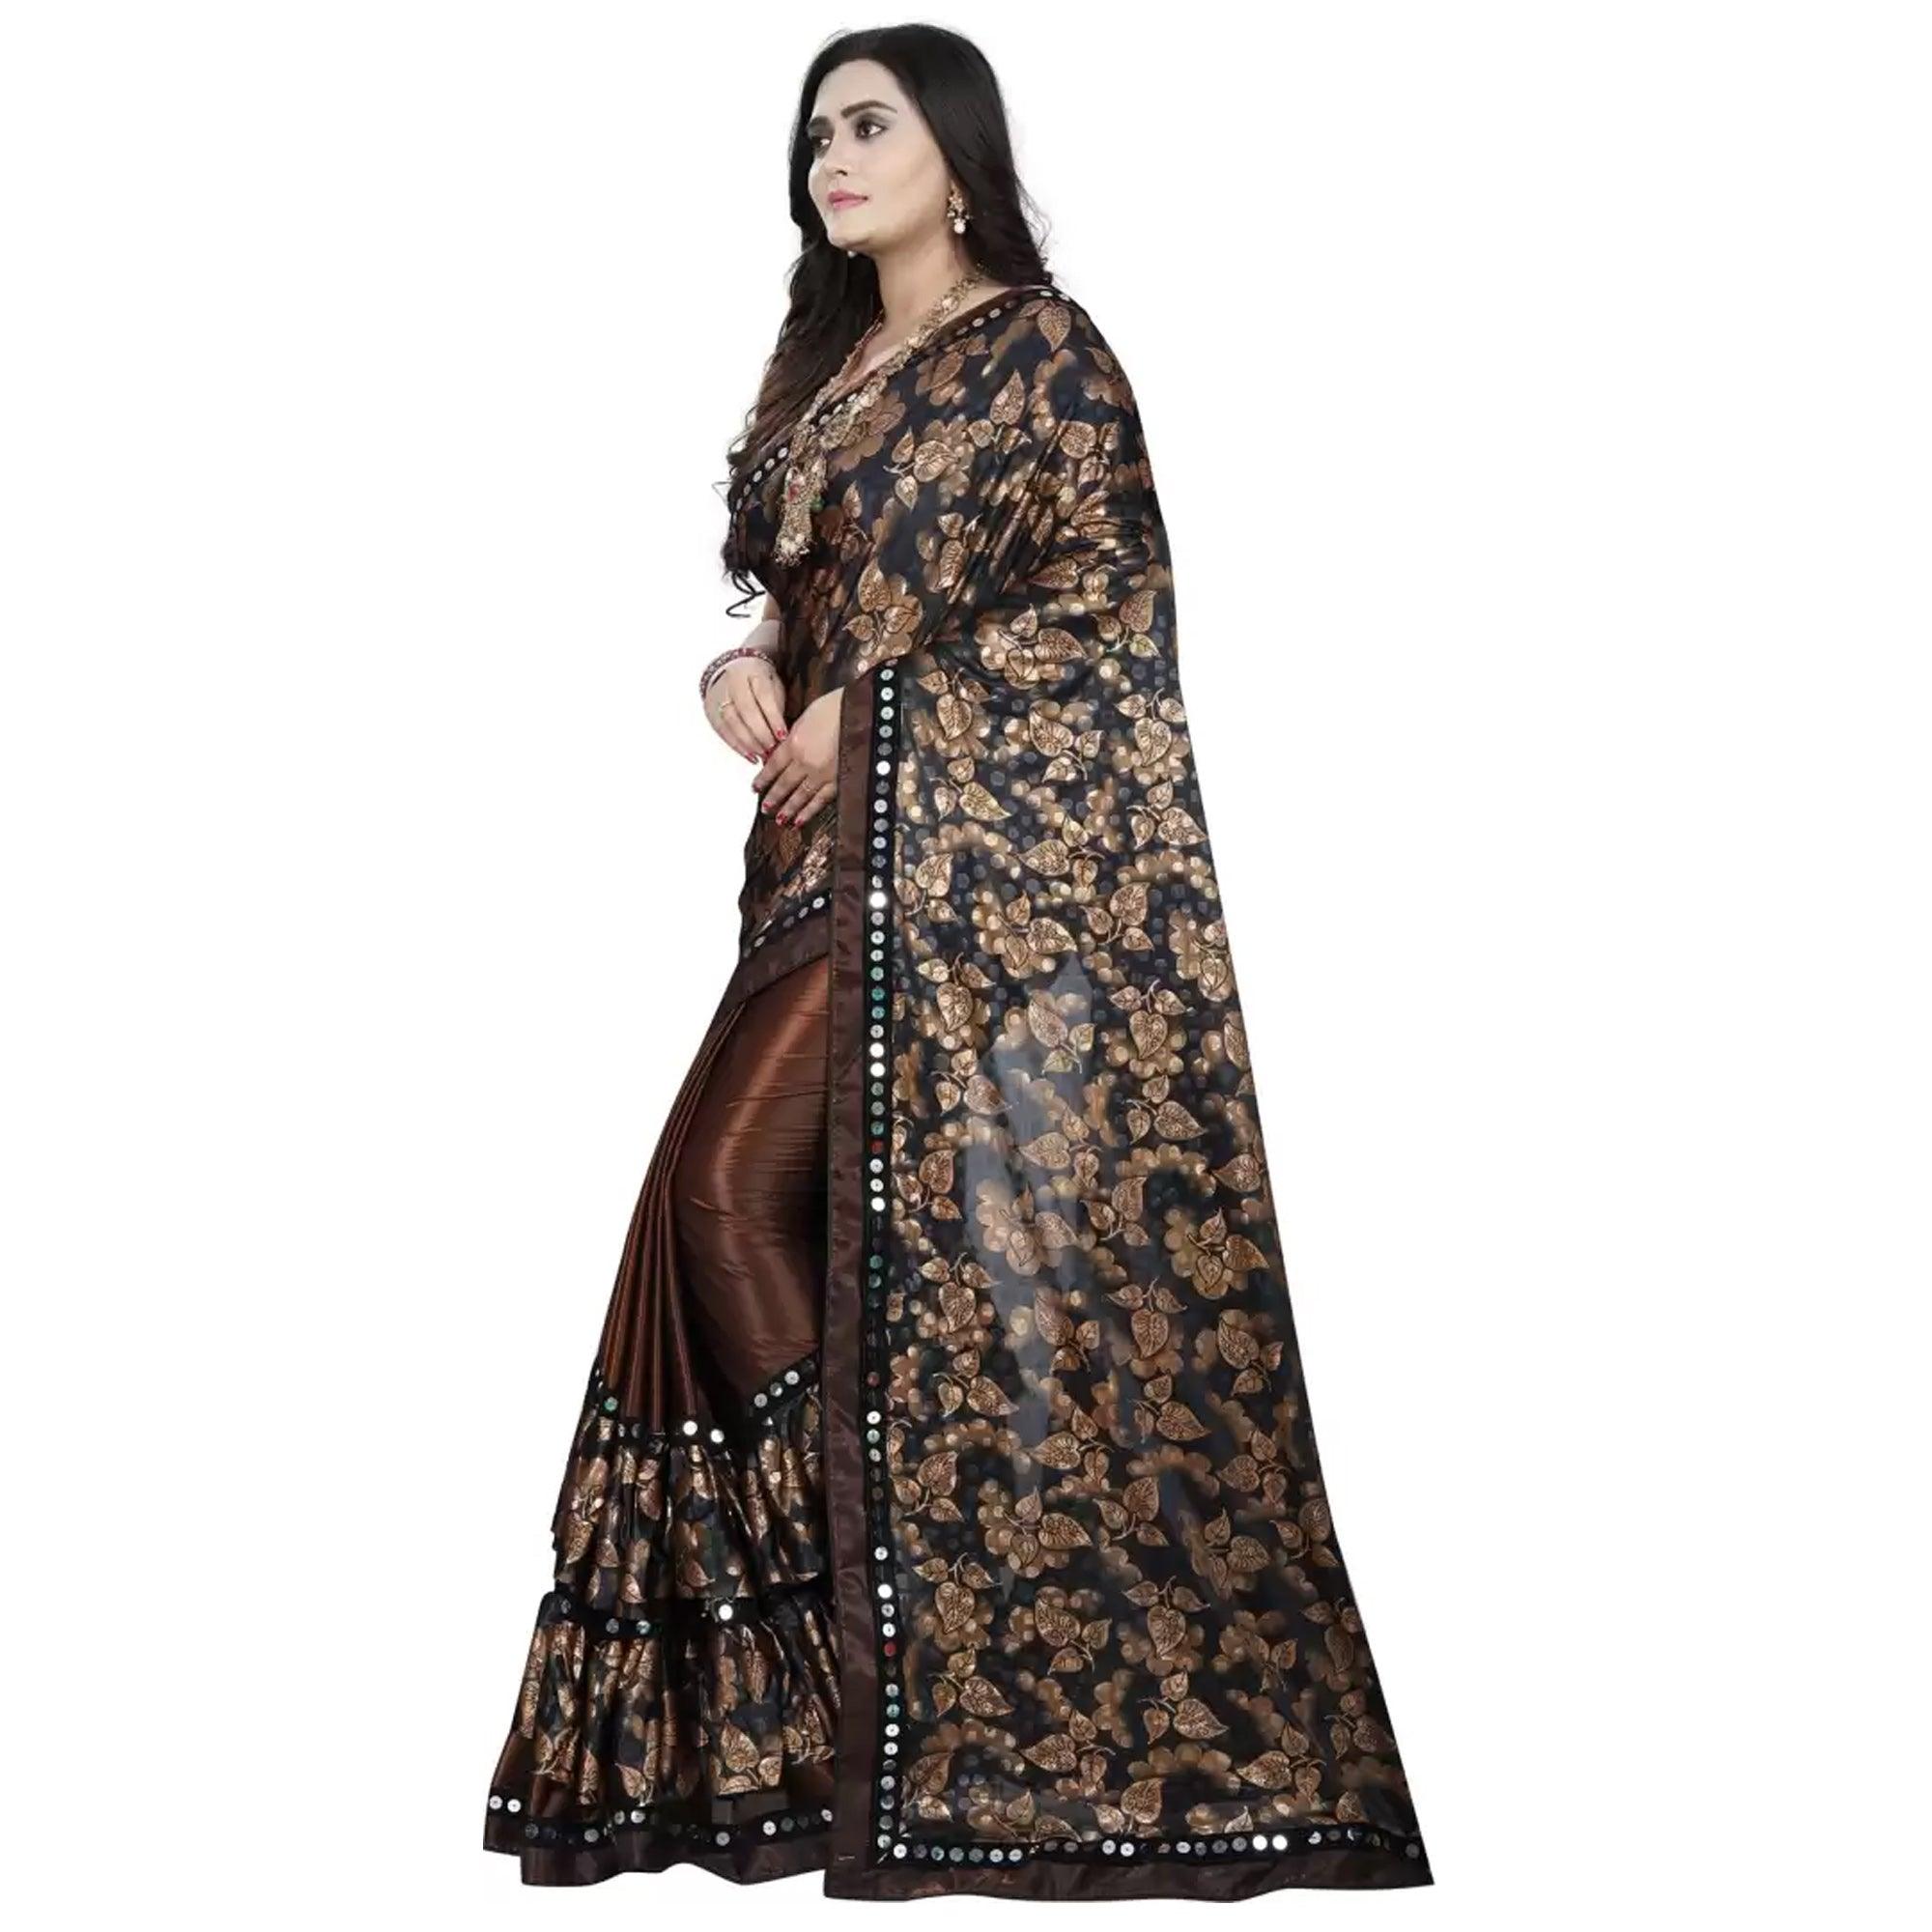 Marvellous Brown-Black Colored Casual Wear Floral Ruffle Art Silk Saree - Peachmode